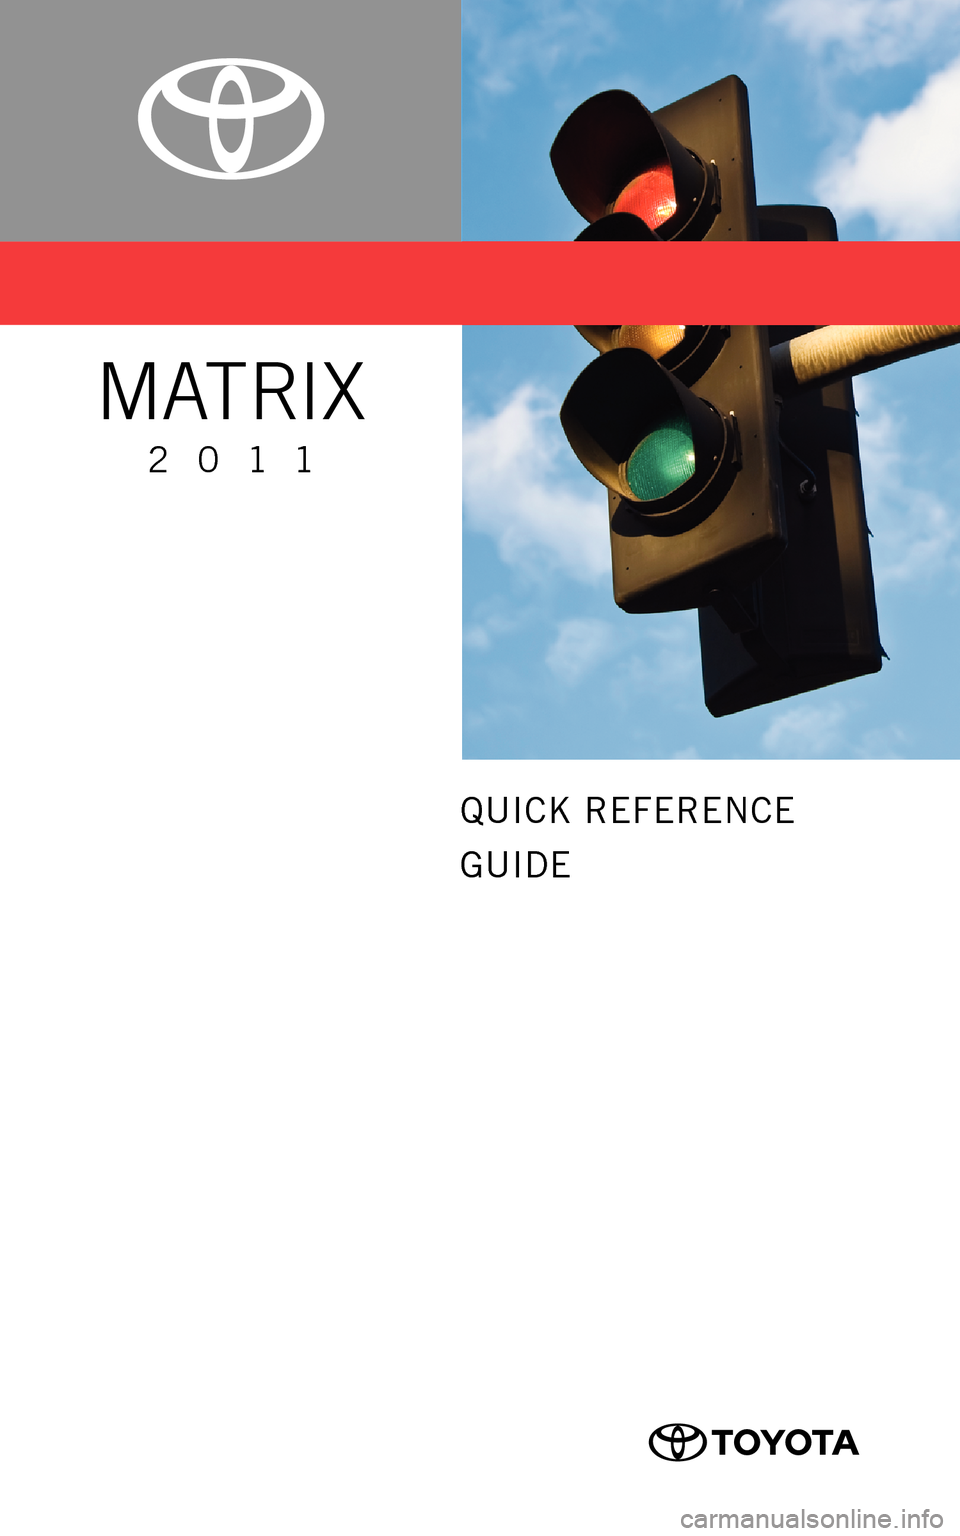 TOYOTA MATRIX 2011 E140 / 2.G Quick Reference Guide QUICK REFERENCE 
GUIDE
MATRIX
2011
414843M1     1
414843M1   1 11/17/10   7:23  PM
11/17/10   7:23 PM 